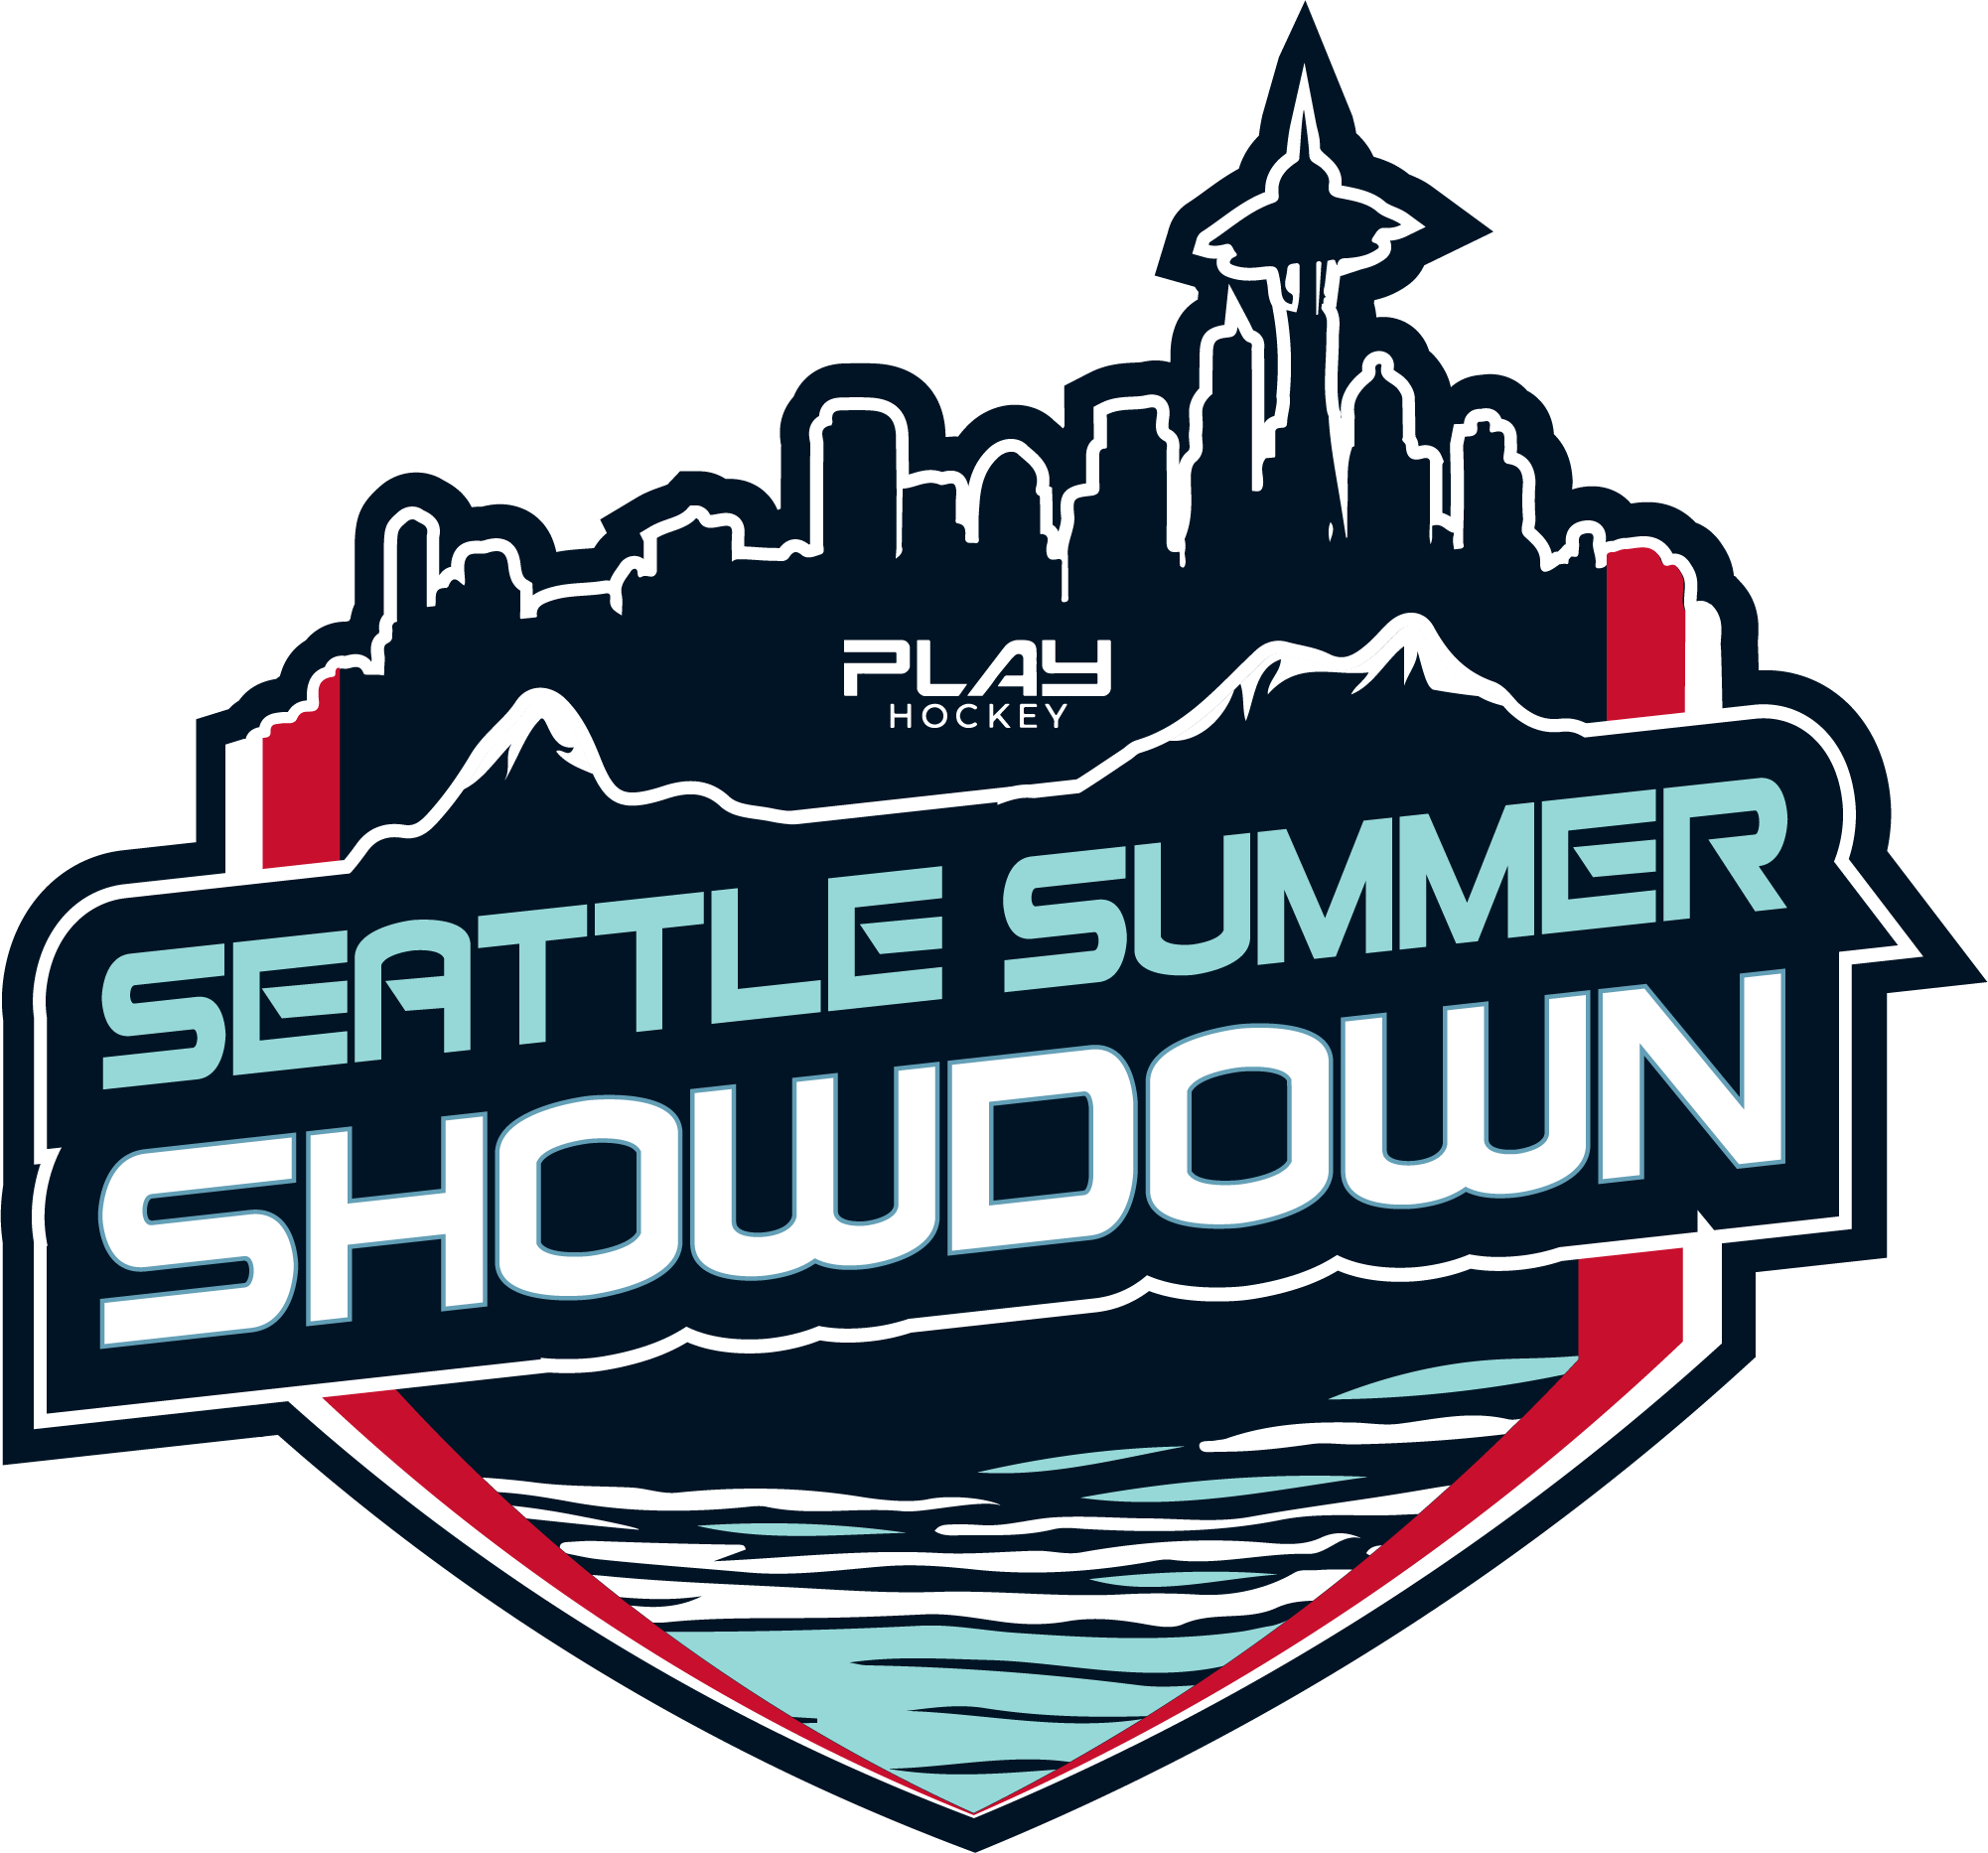 https://20502767.fs1.hubspotusercontent-na1.net/hubfs/20502767/PH-Seattle-Summer-Showdown.png